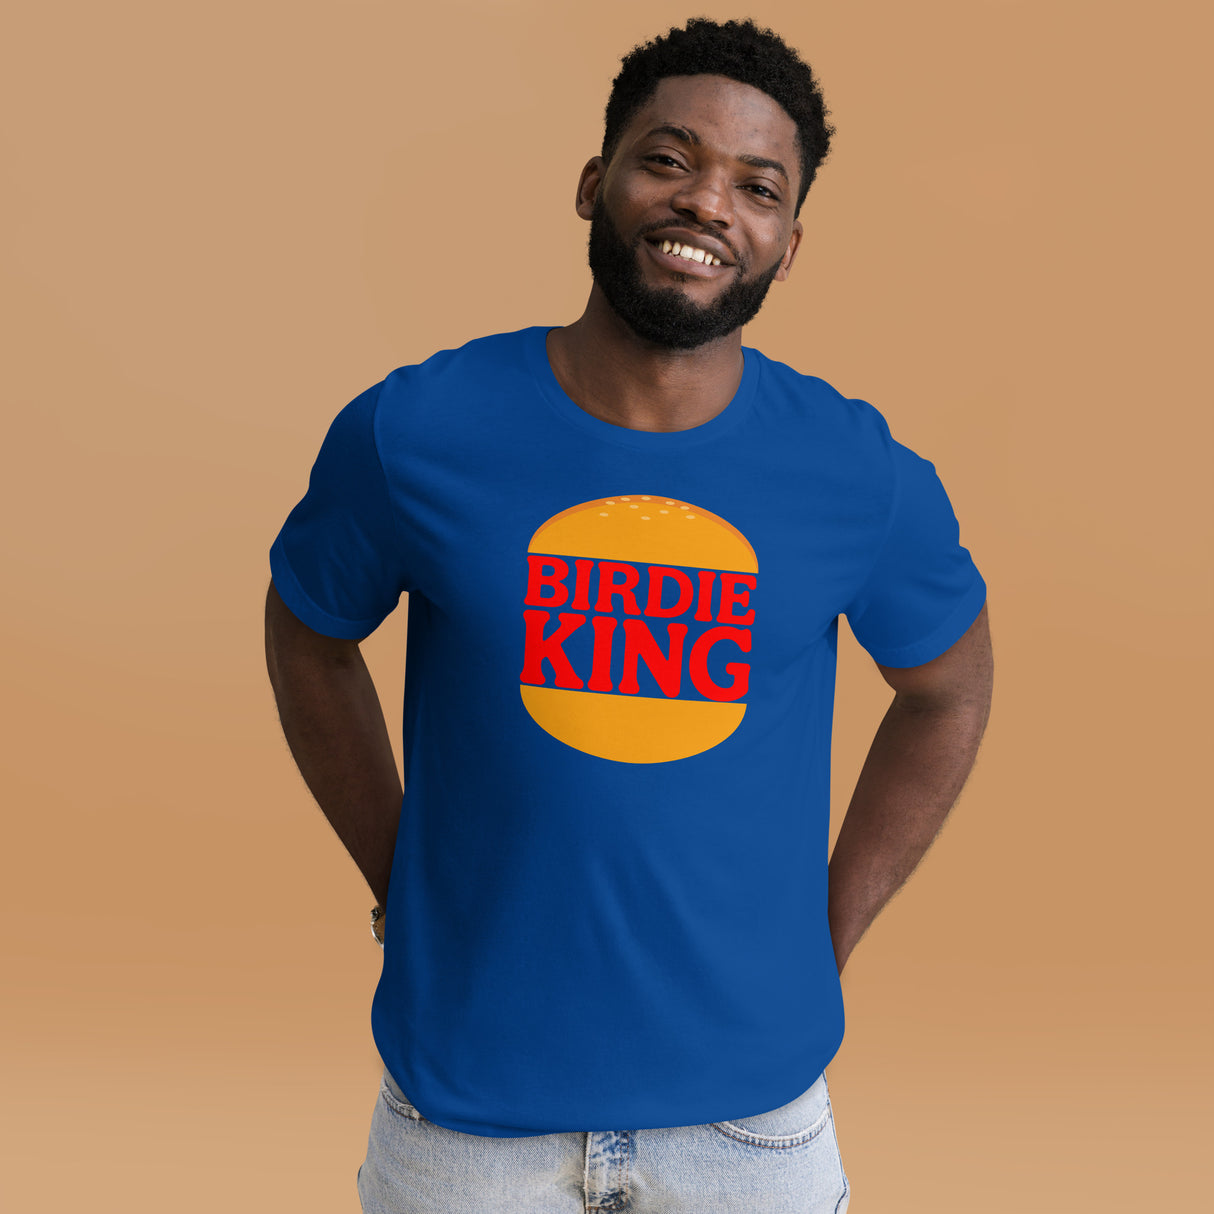 Birdie King Disc Golf Men's Shirt